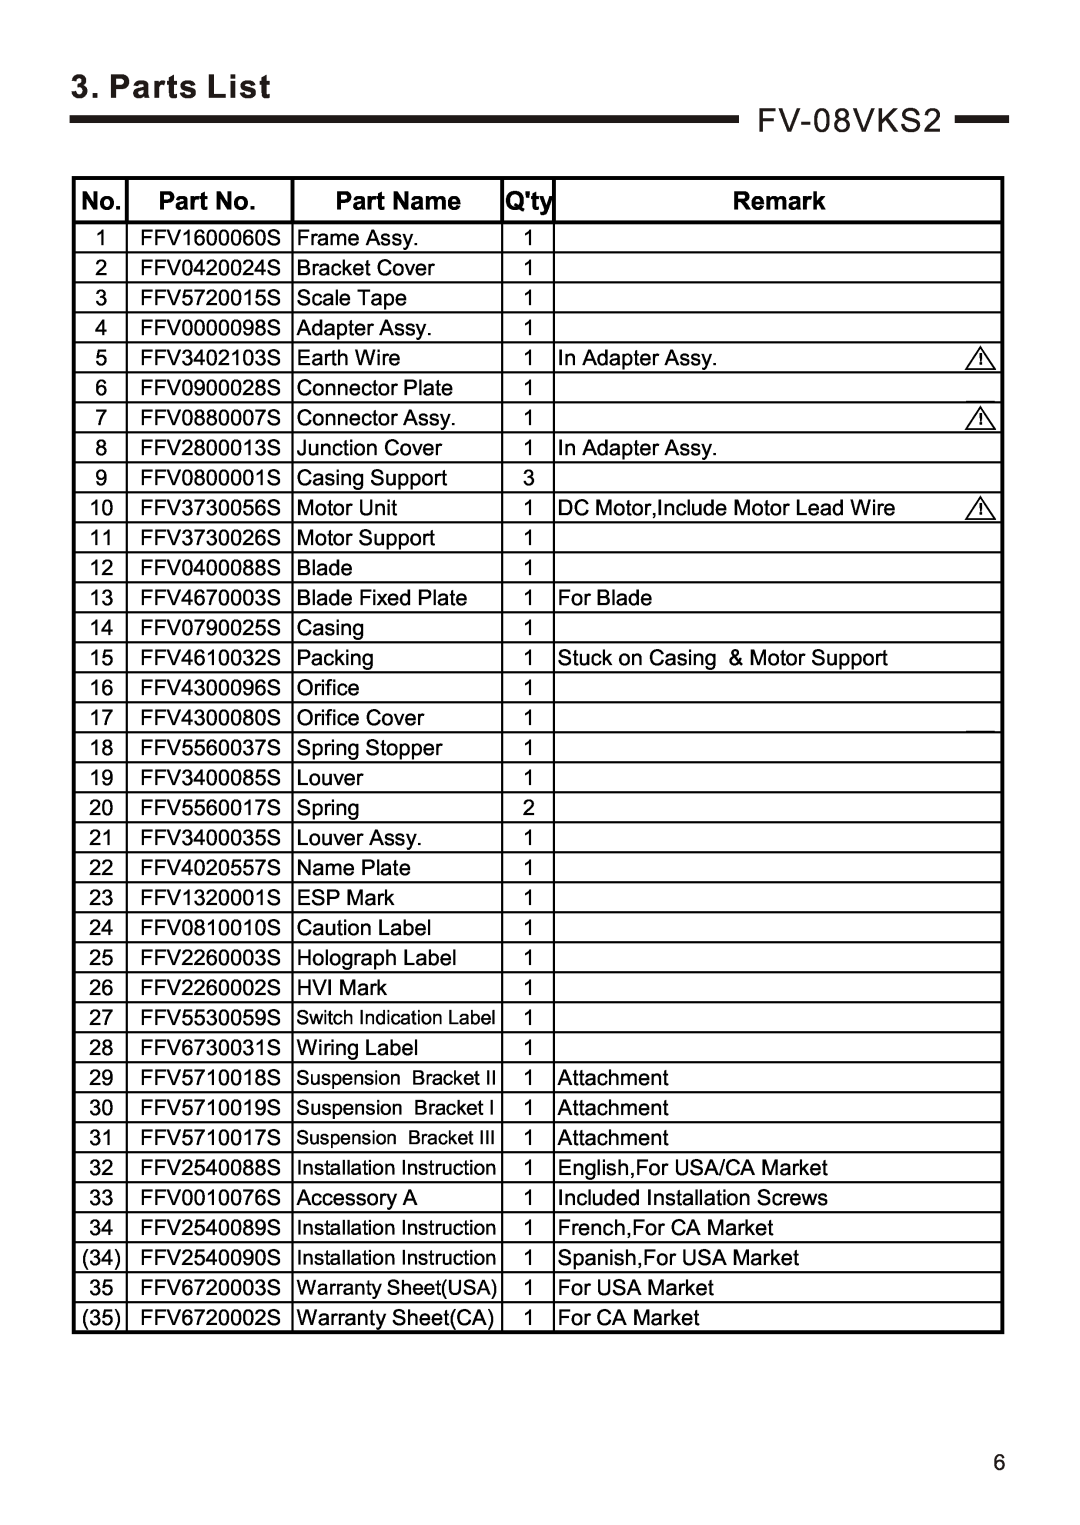 Panasonic FV-08VKS2, FV-08VKM2 service manual Parts List, Part Name, Remark 